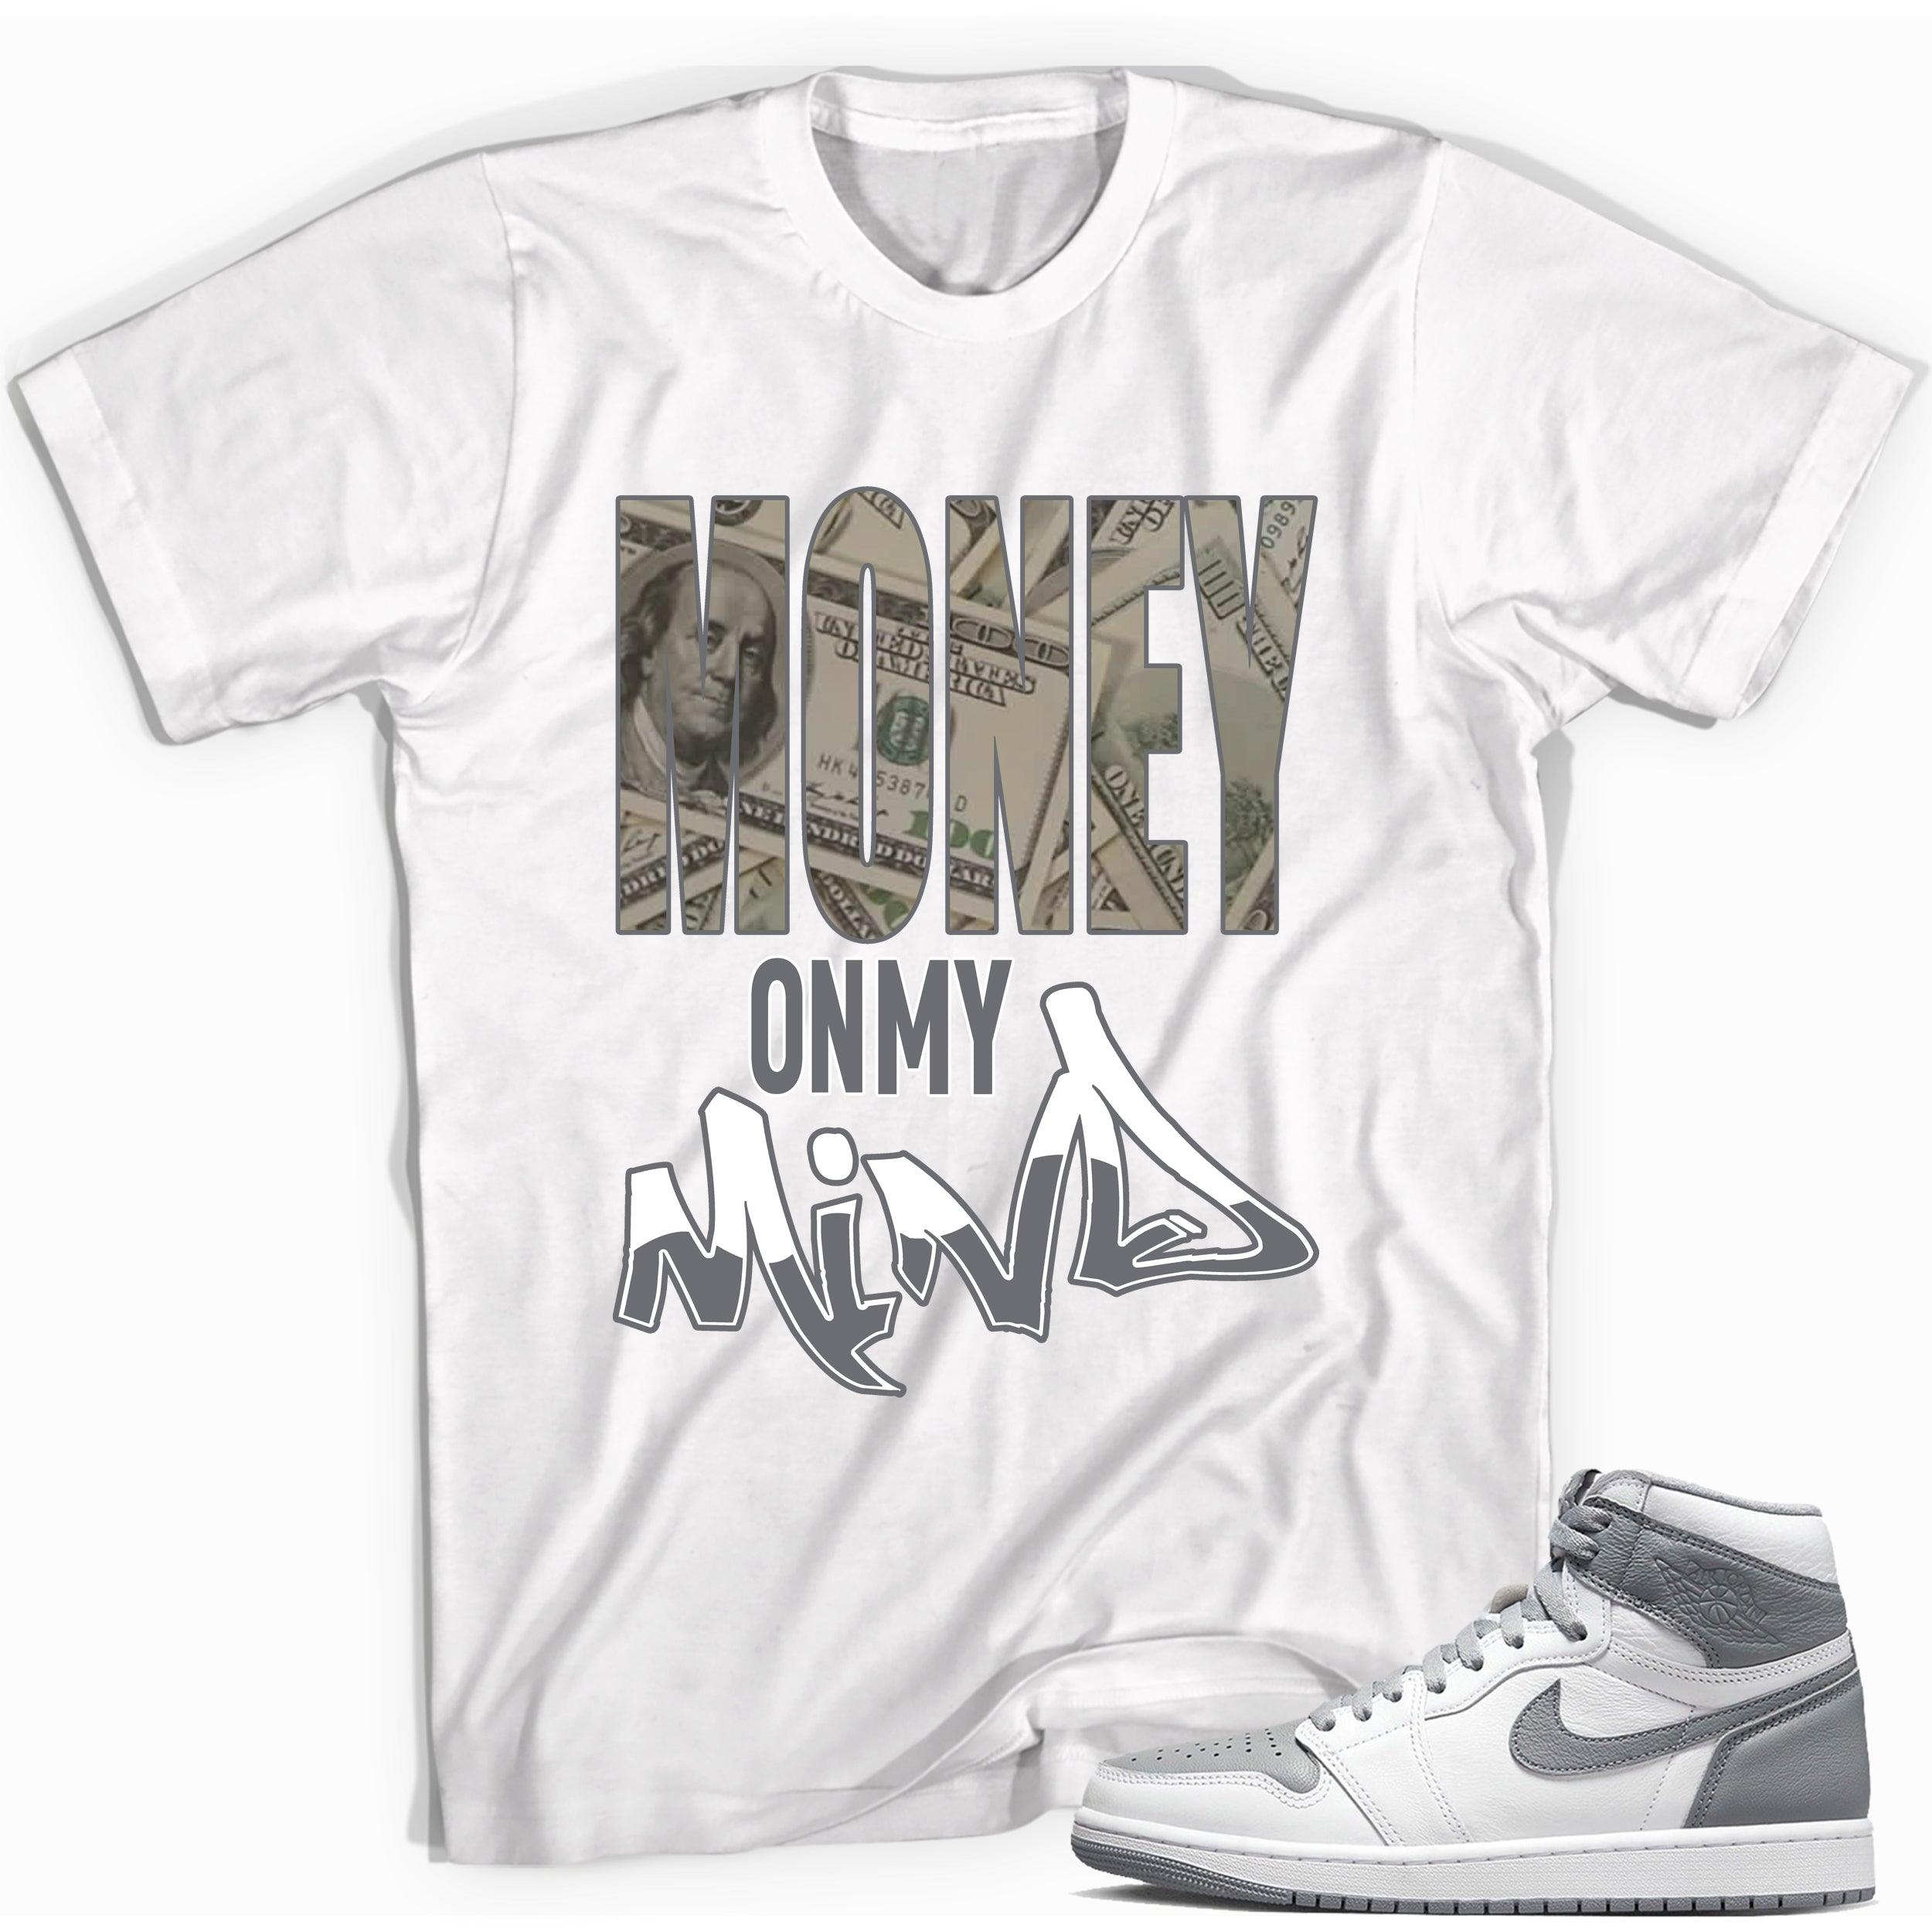 Money on My Mind Shirt for Jordan 1s photo